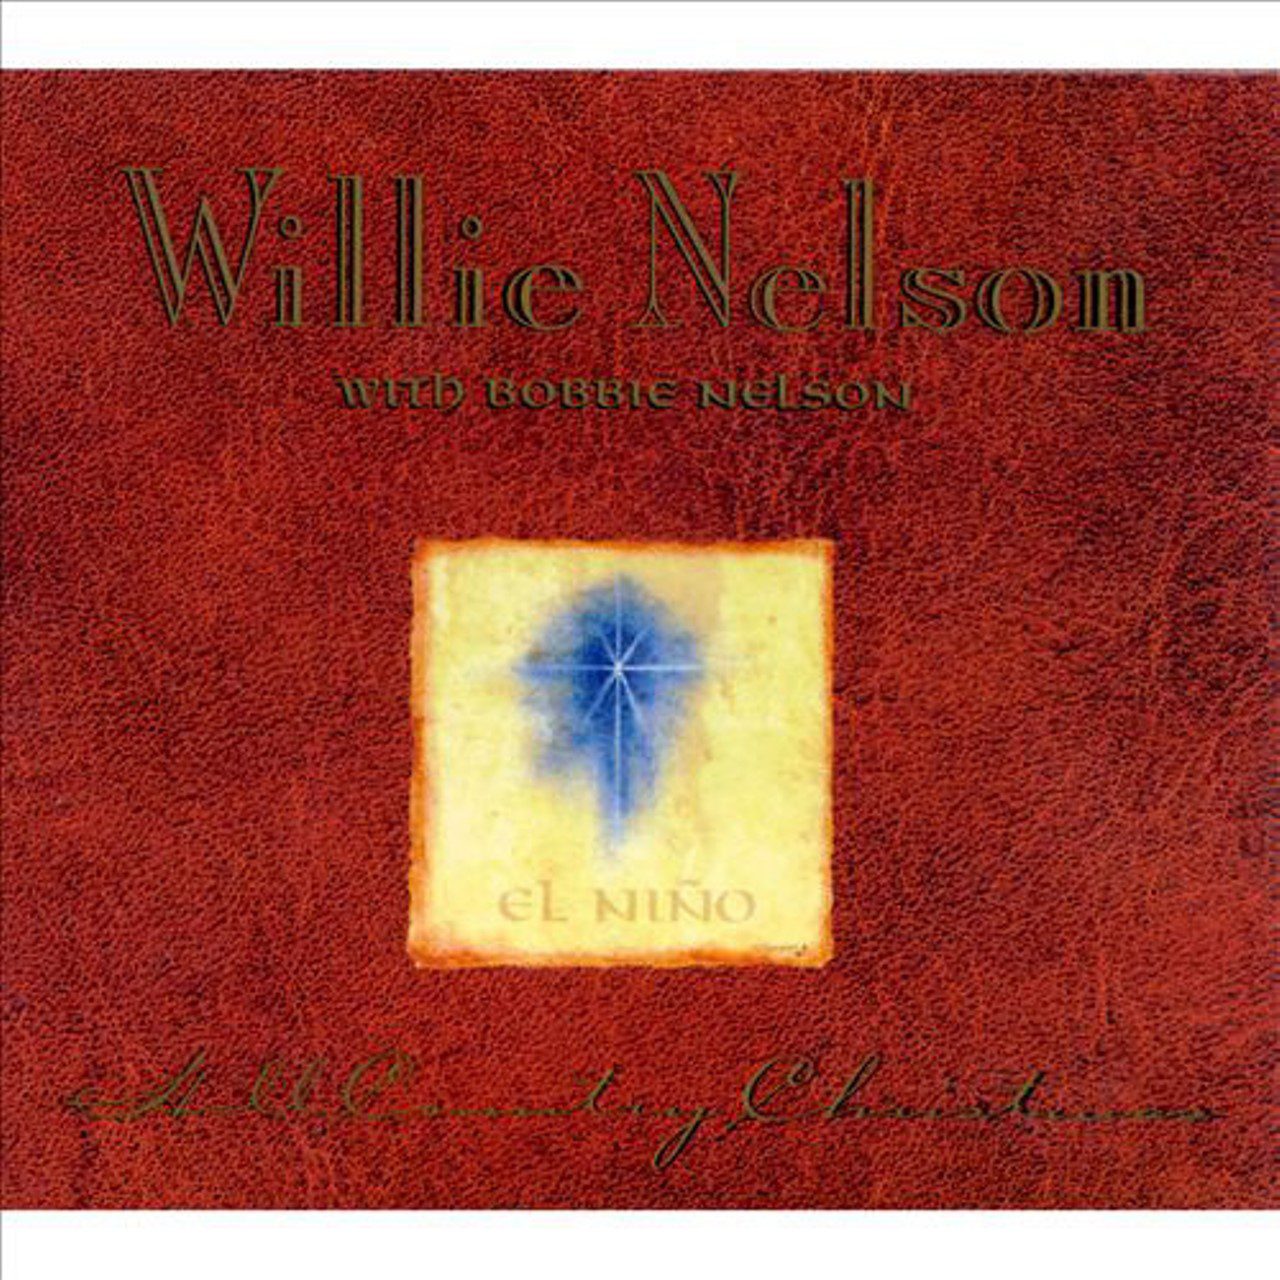 Willie Nelson & Bobbie Nelson – Hill Country Christmas cover album